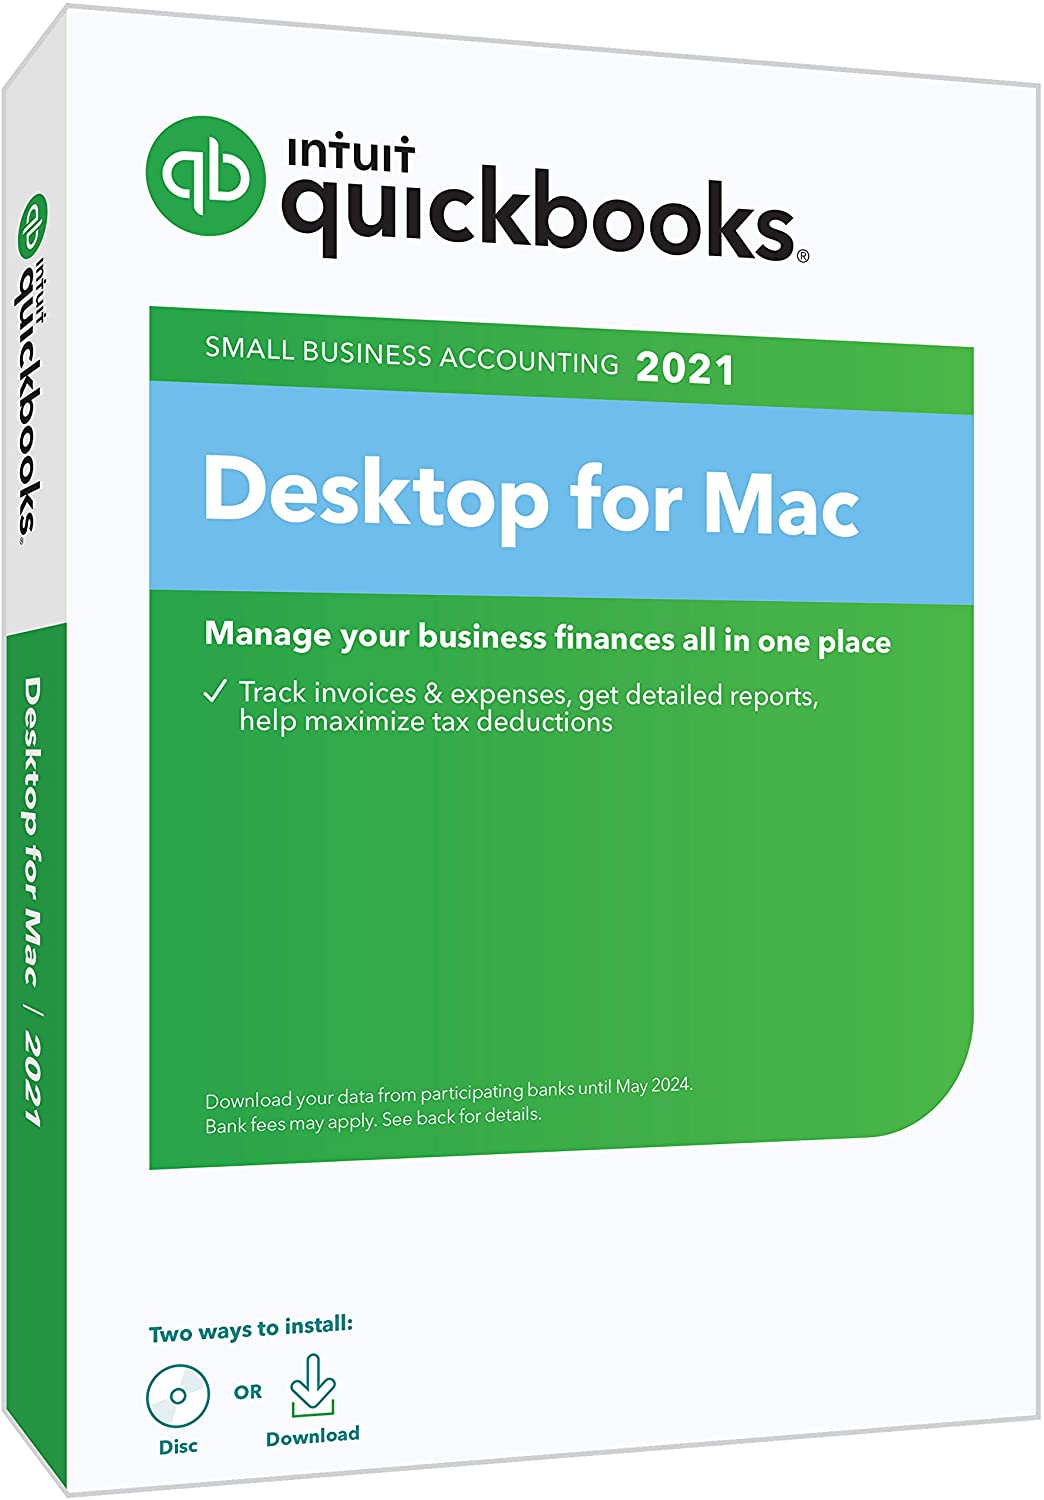 mac desktop for business